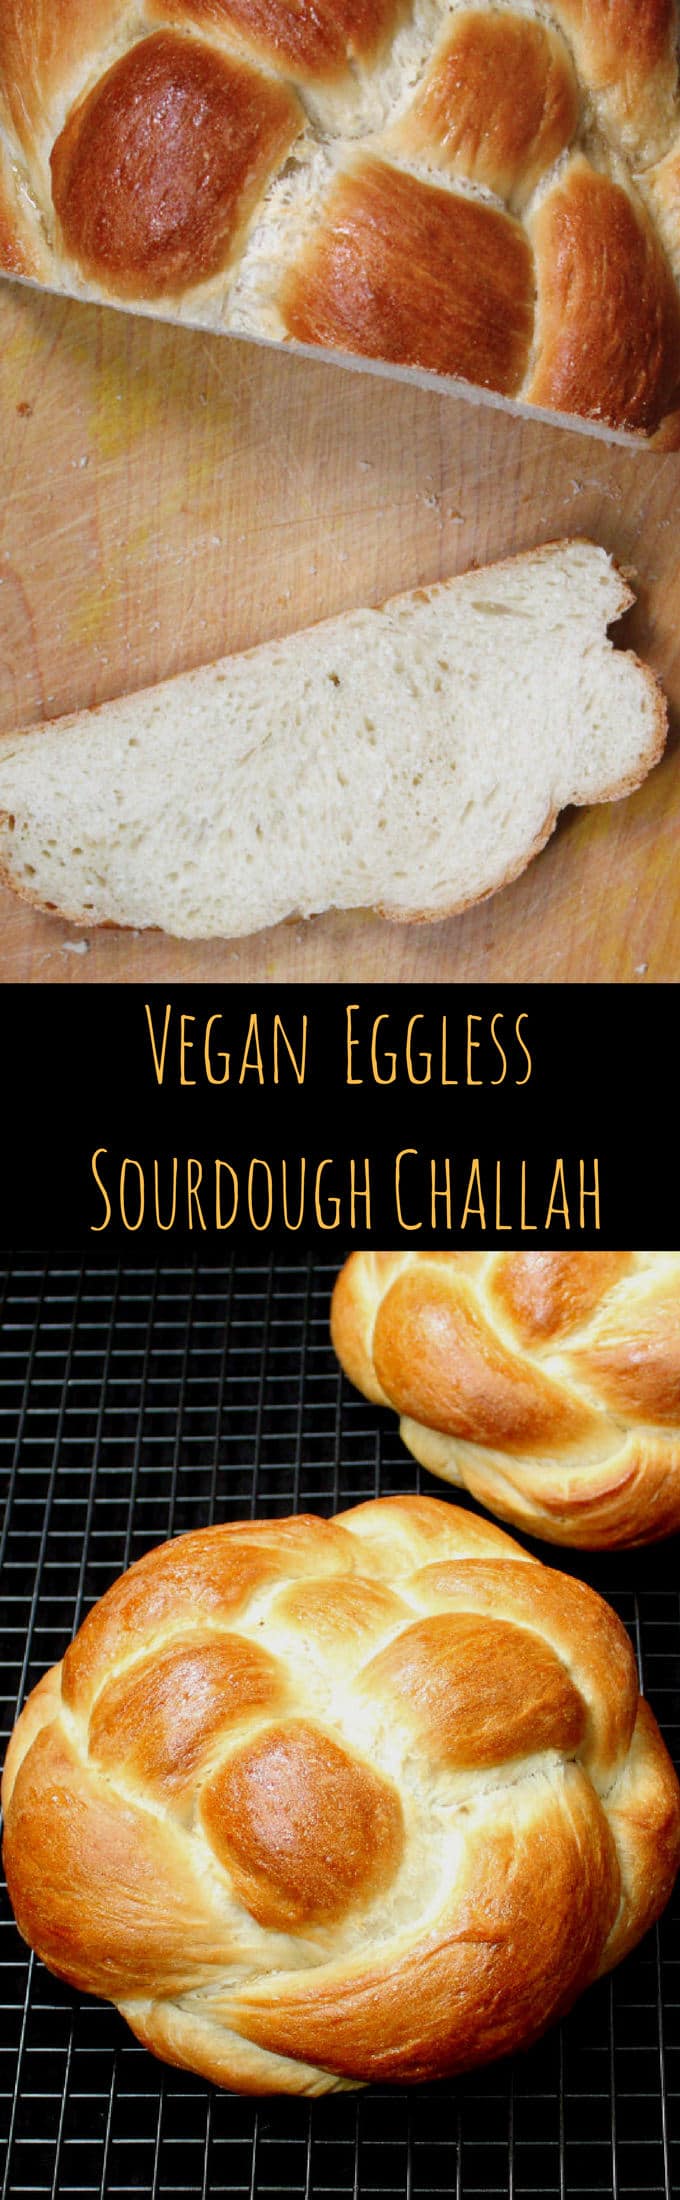 Vegan Eggless Sourdough Challah - HolyCowVegan.net